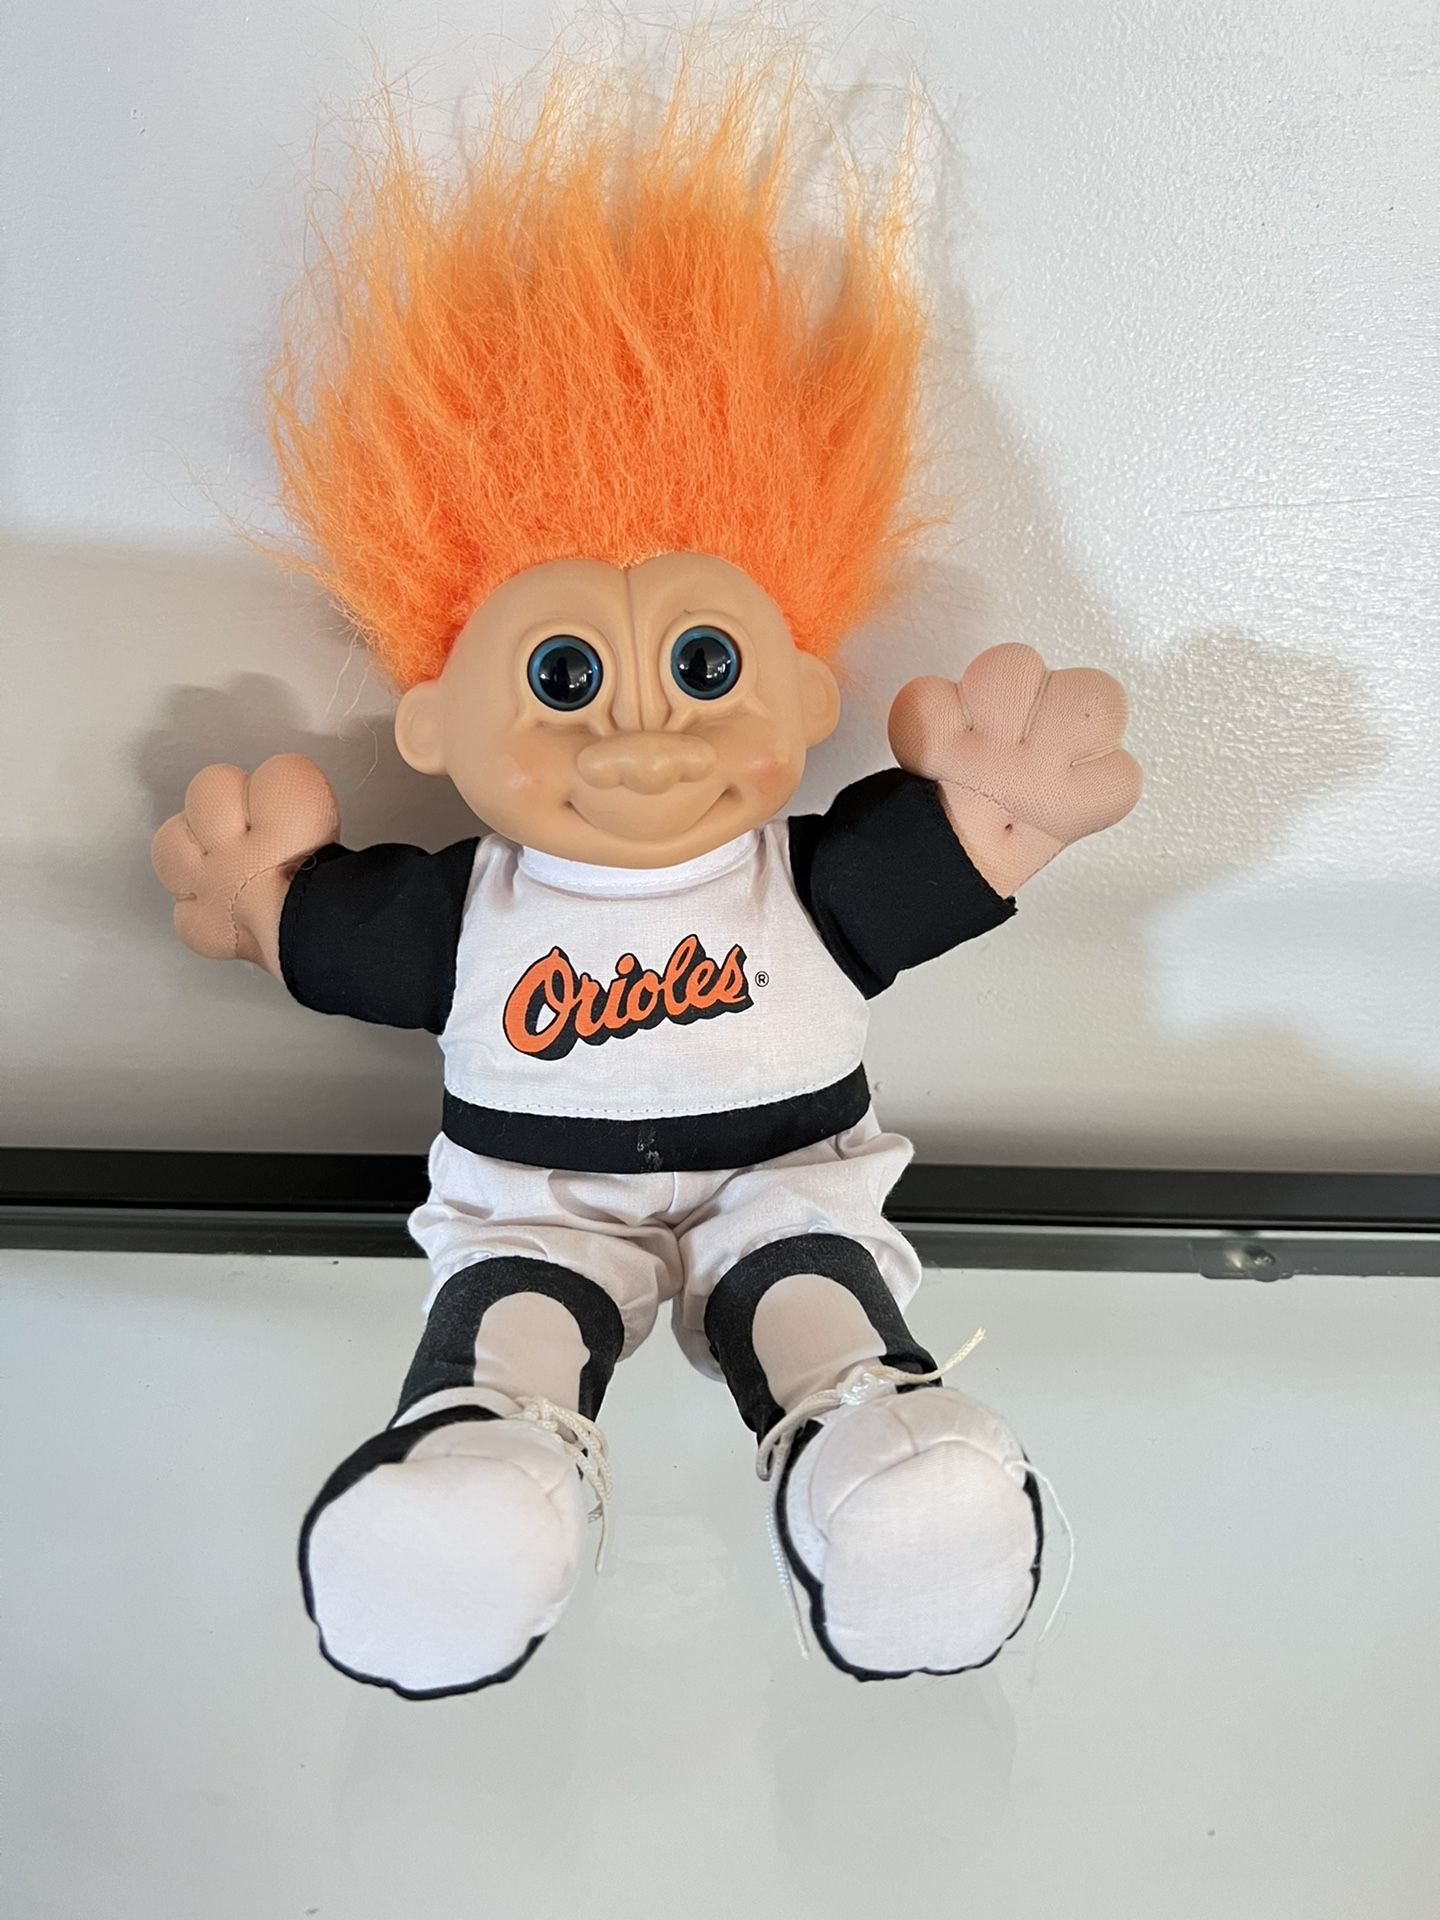 Russ Troll Figure Orioles Baseball Doll Toy 12.5” Orange White Black MLB Decor 